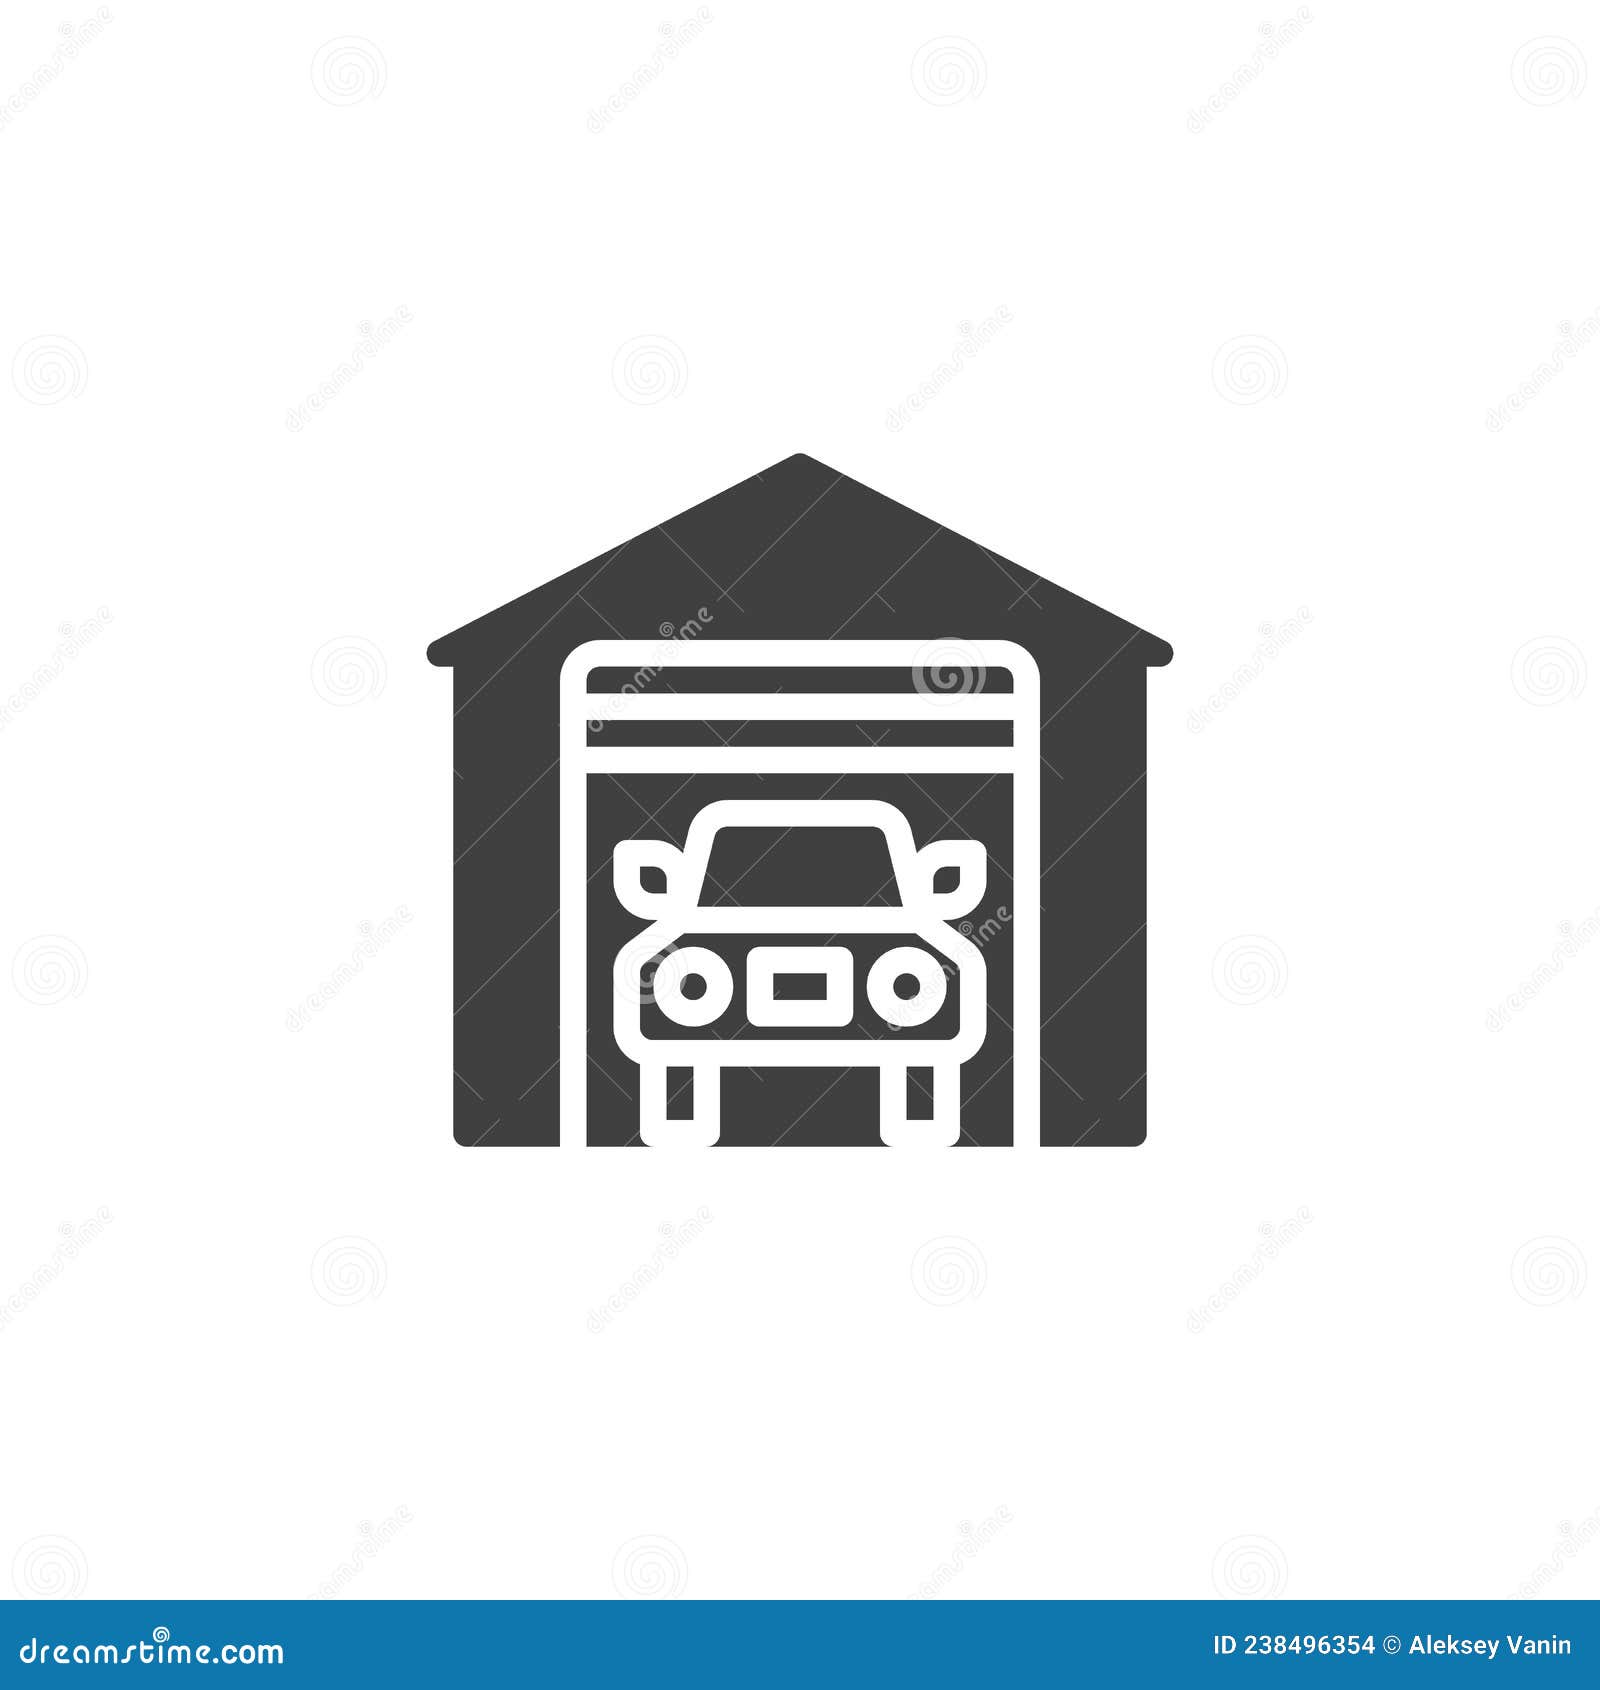 Car garage vector icon stock vector. Illustration of pictogram - 238496354